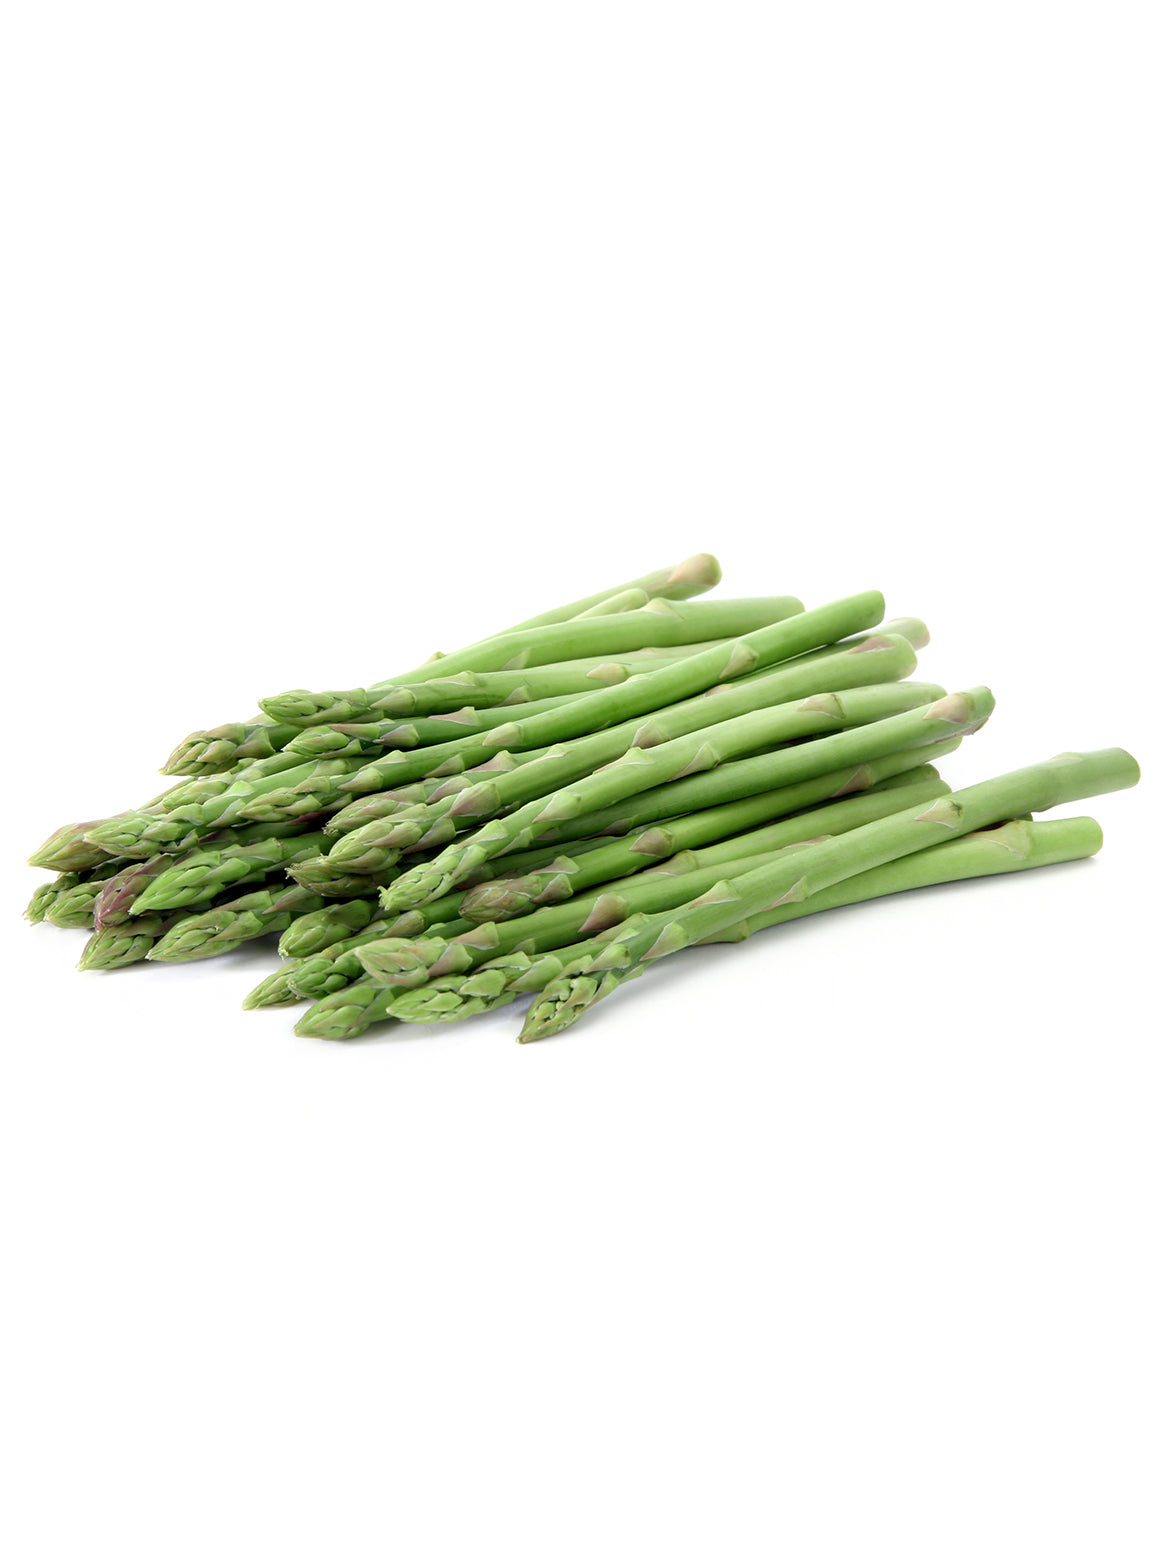 Asparagus Medium/Large  - 1 lbs